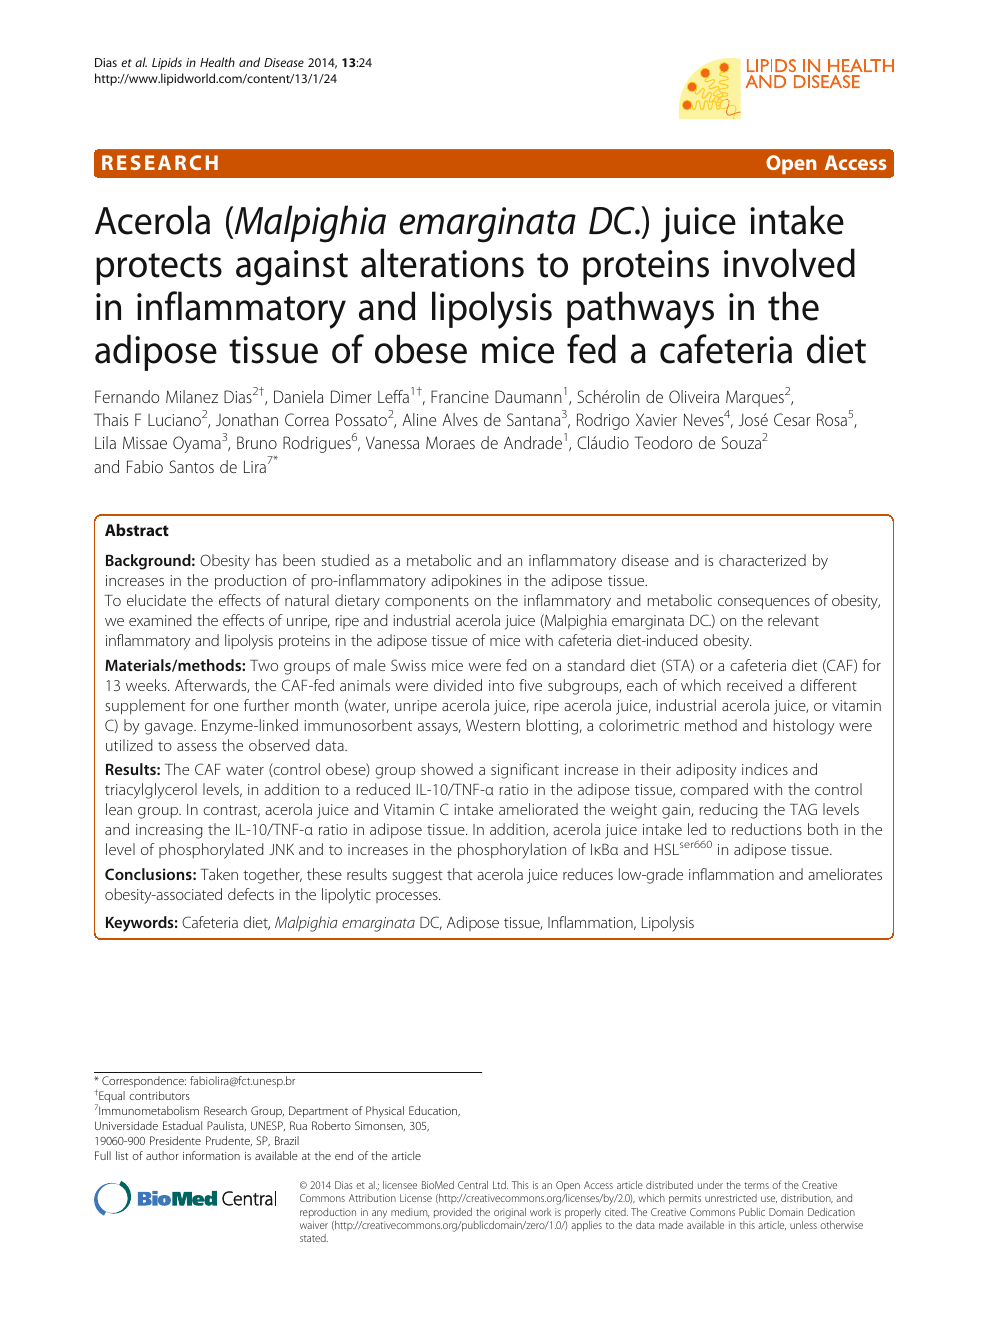 Acerola Malpighia Emarginata Dc Juice Intake Protects Against